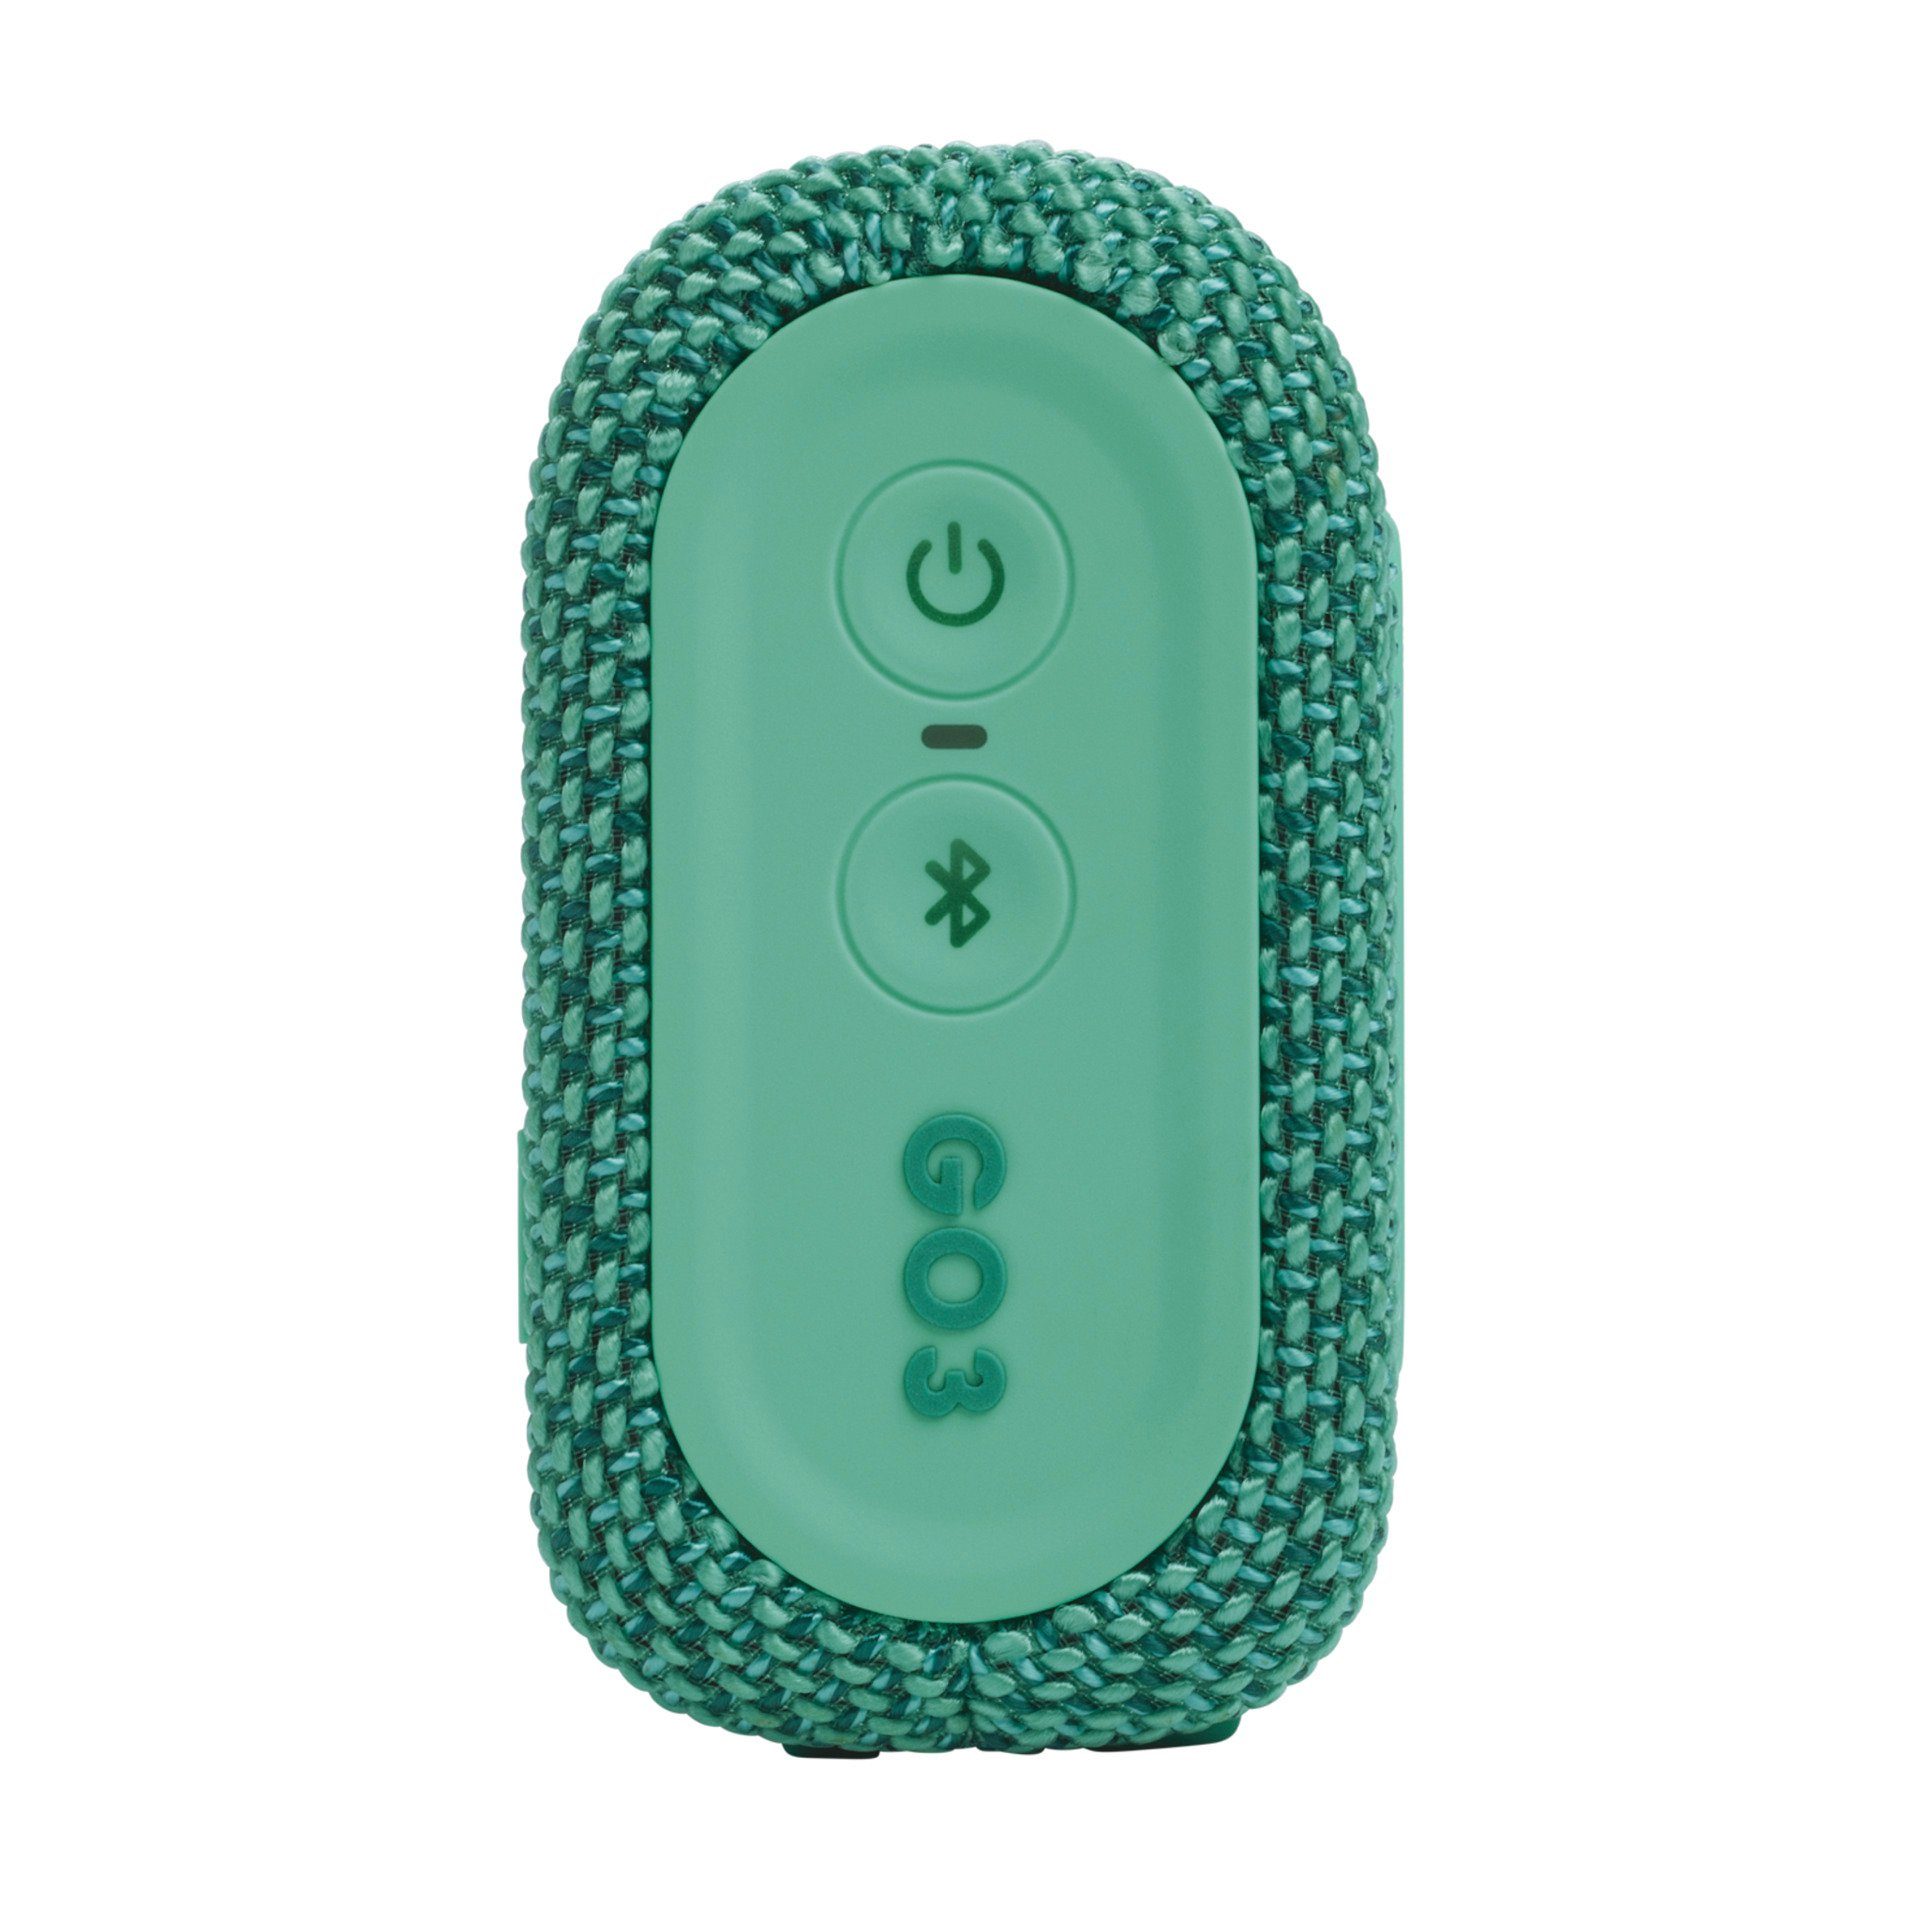 ECO 3 JBL 4,2 W) Bluetooth-Lautsprecher Grün GO (A2DP Bluetooth,